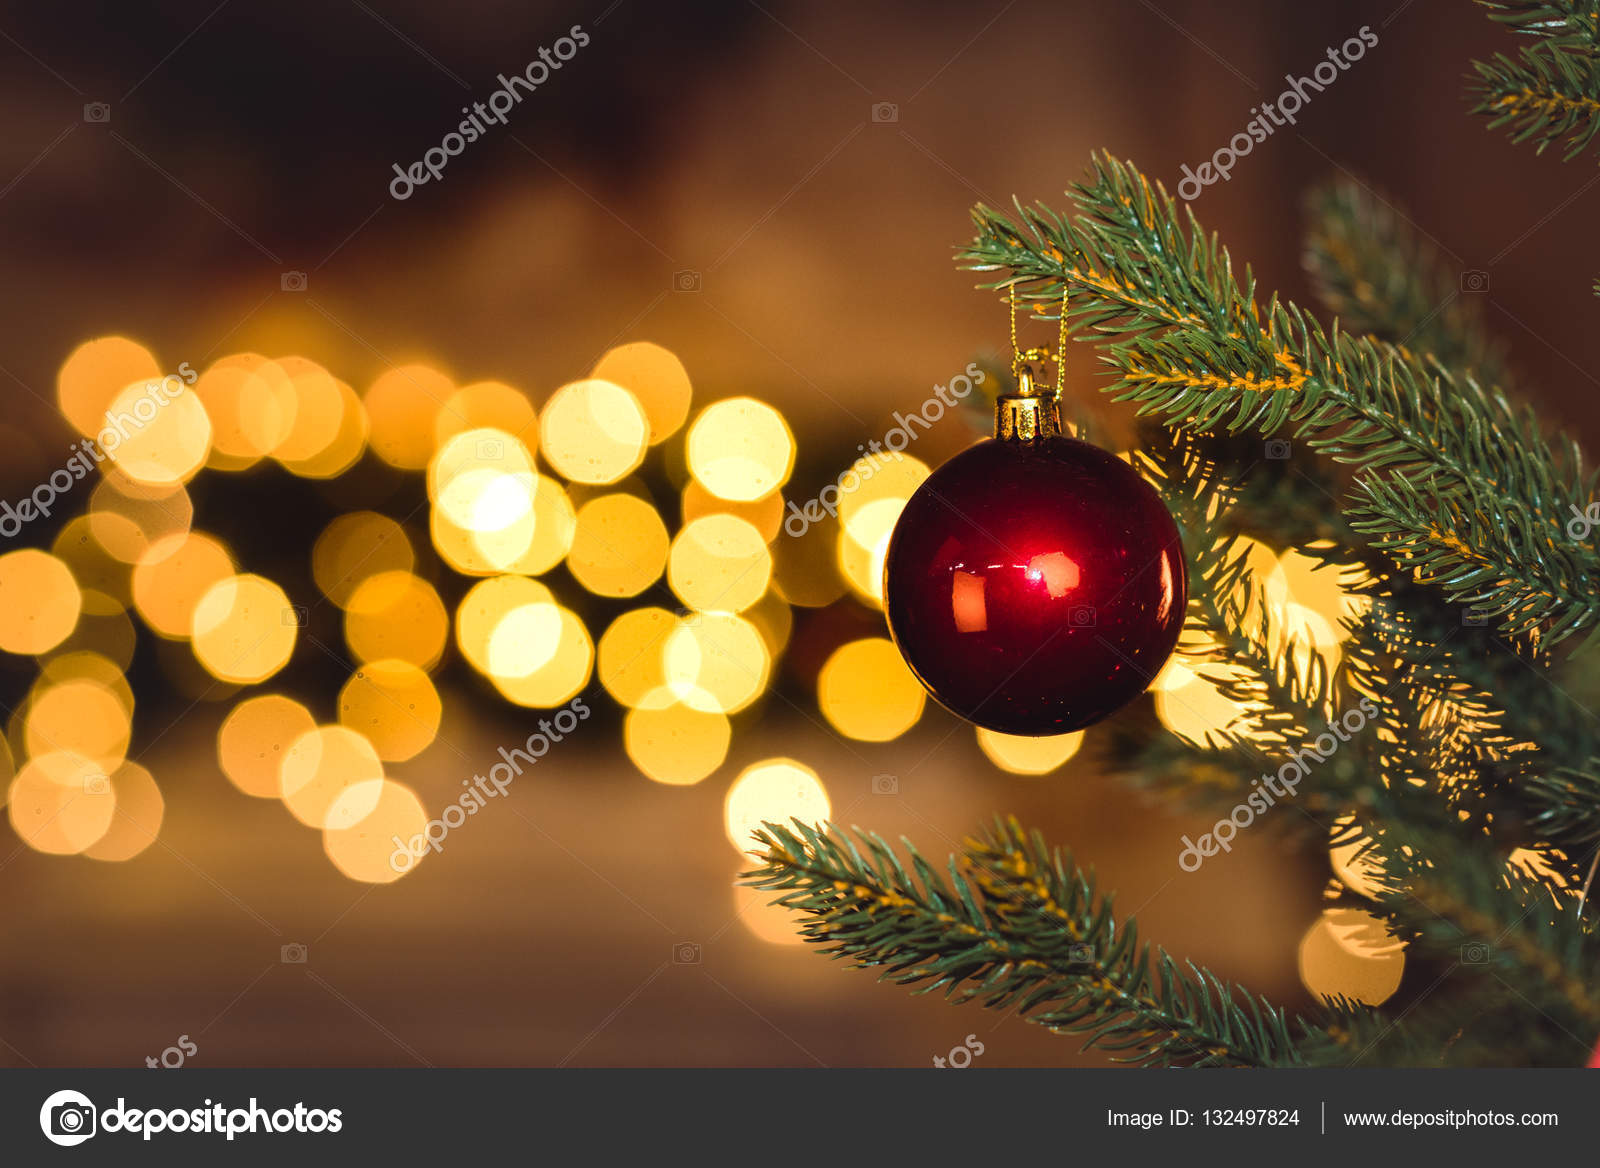 depositphotos_132497824-stock-photo-festive-christmas-background.jpg